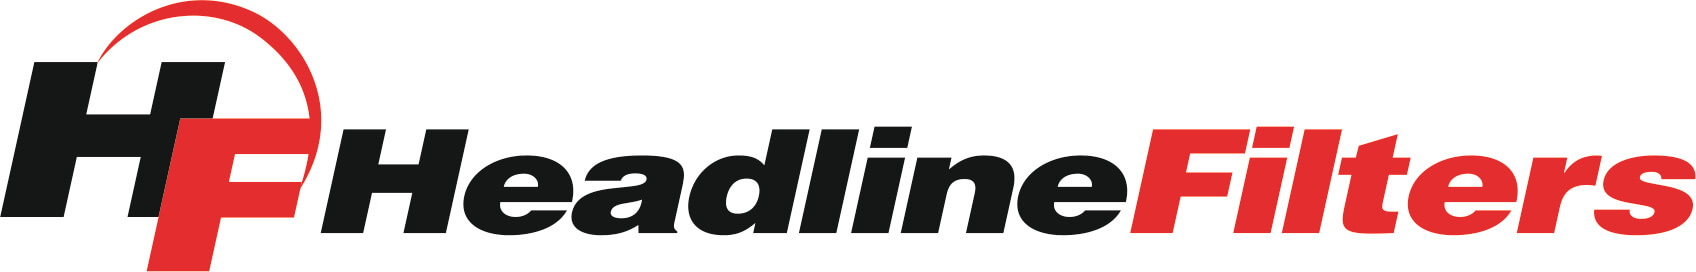 headline filters logo